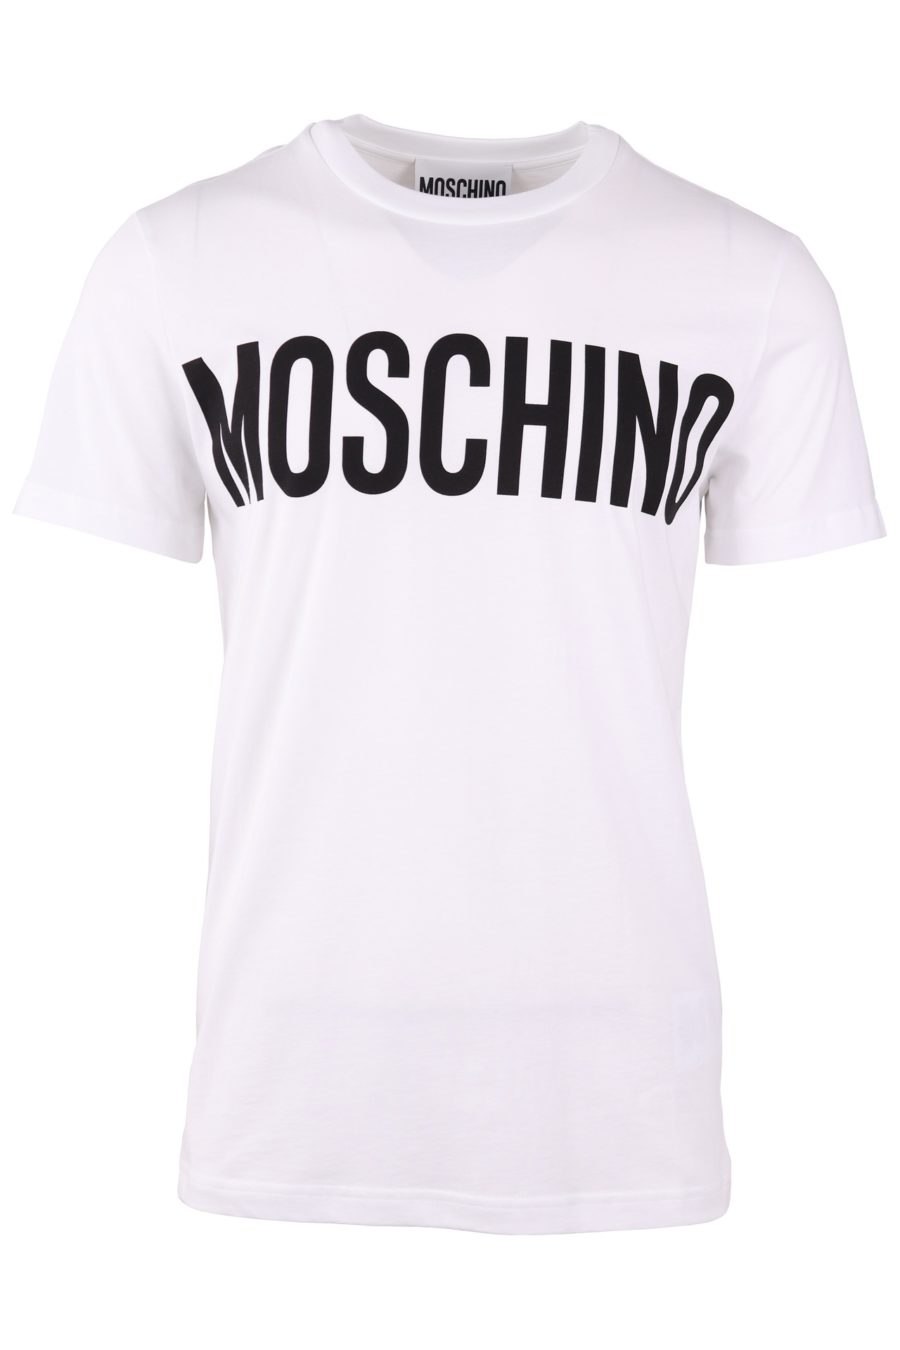 Moschino Couture weißes T-Shirt mit schwarzem Logo vorne - 957deafc0a212be66e2bc0c8fbf9e092f5147864